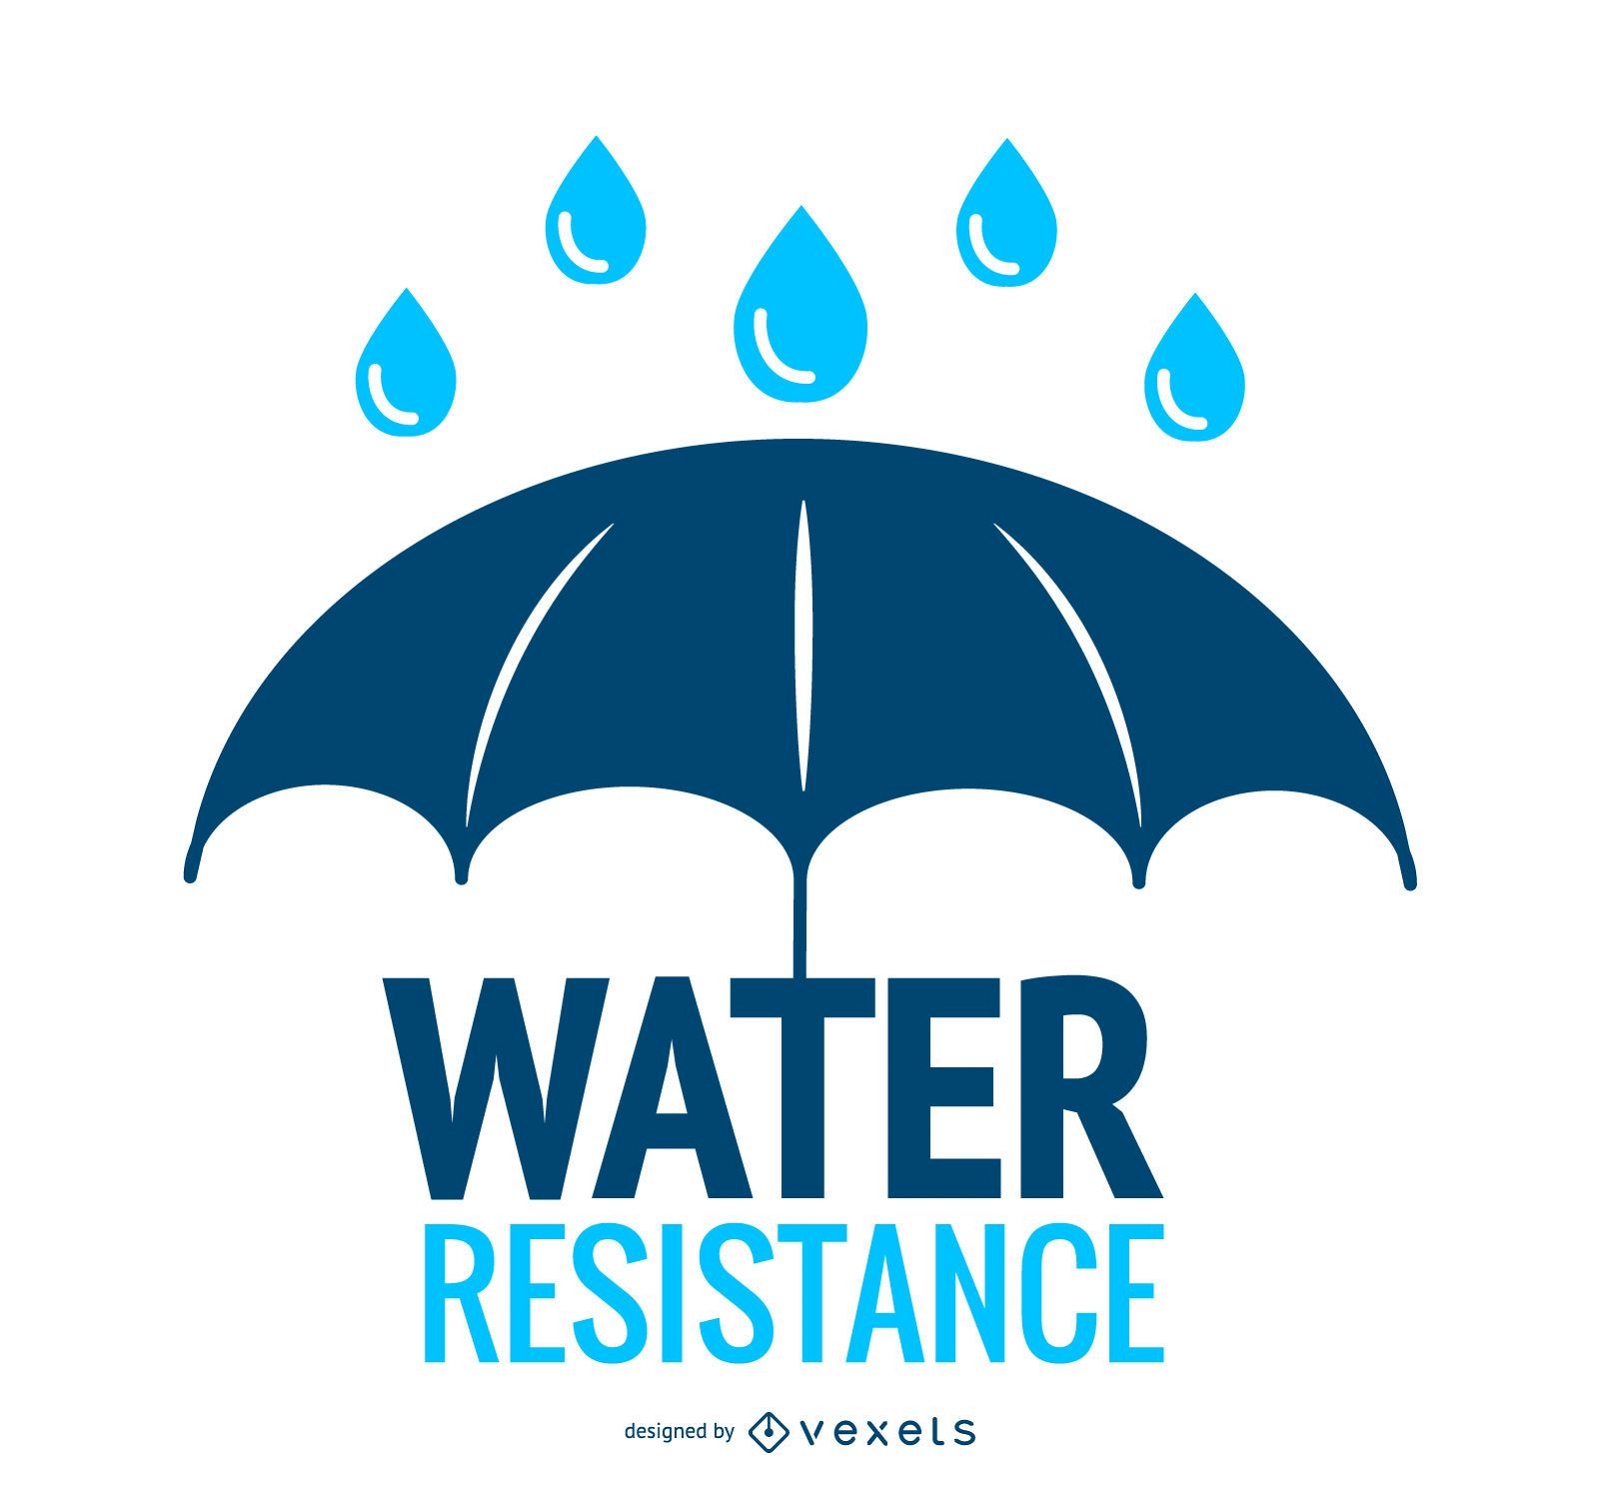 Water resistance umbrella icon